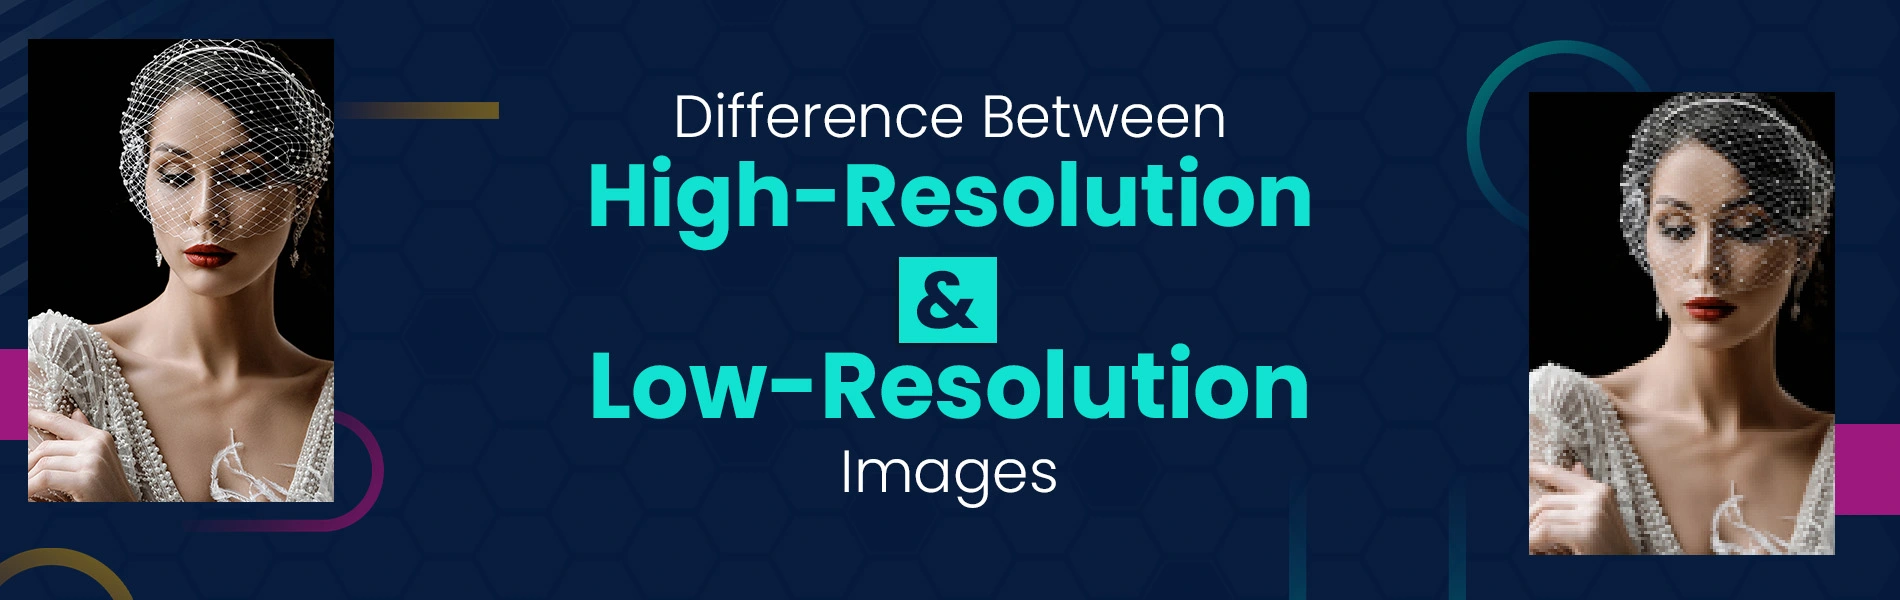 low resolution image vs high resolution image